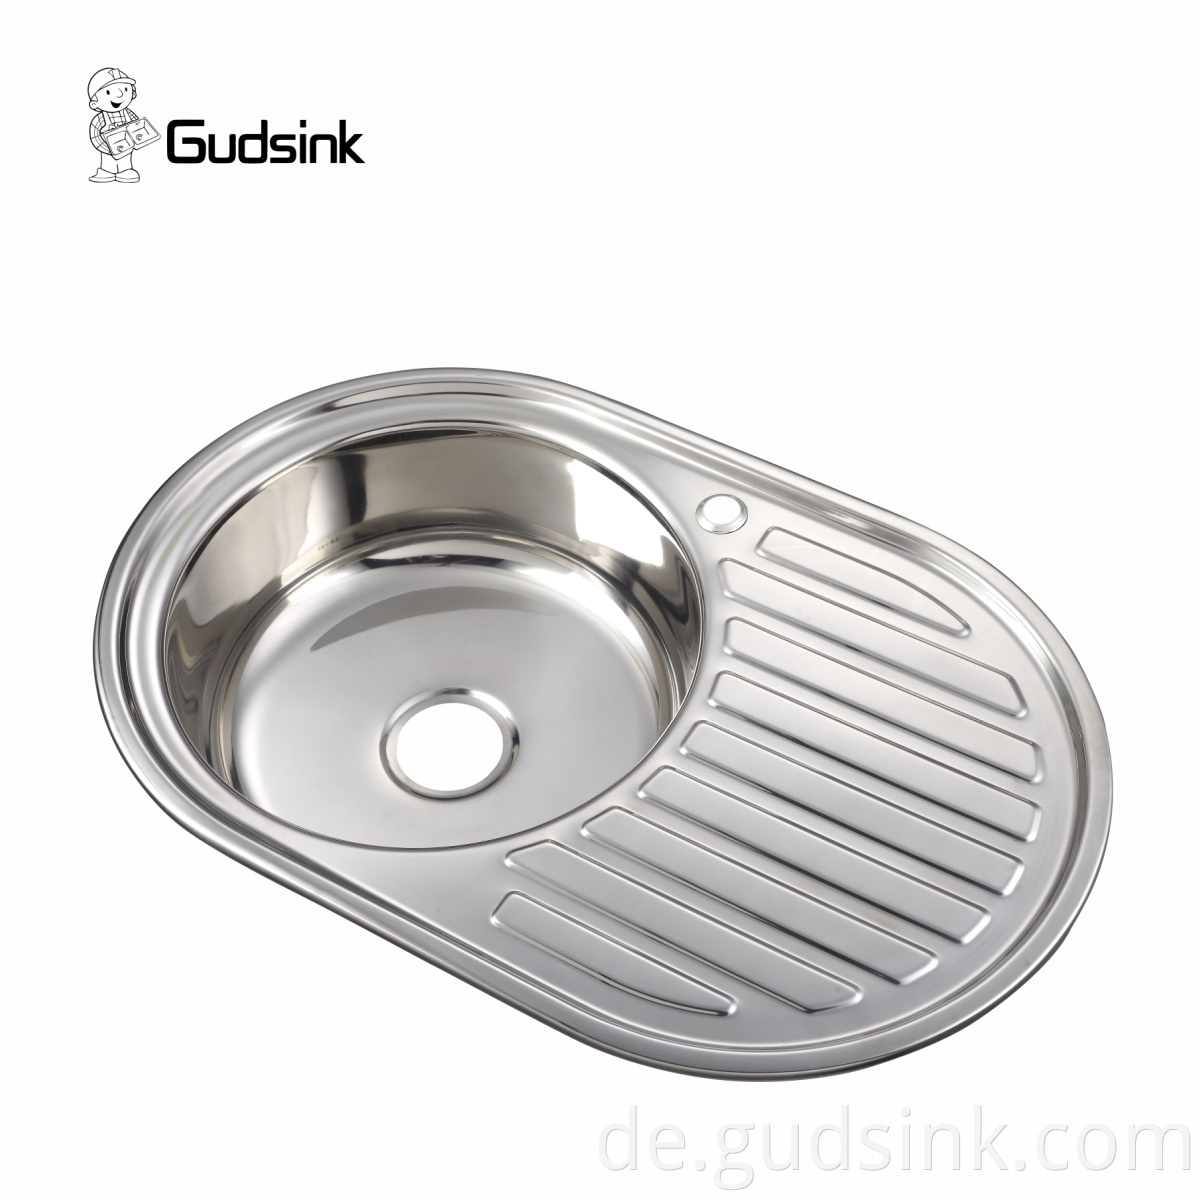 stainless steel sink round